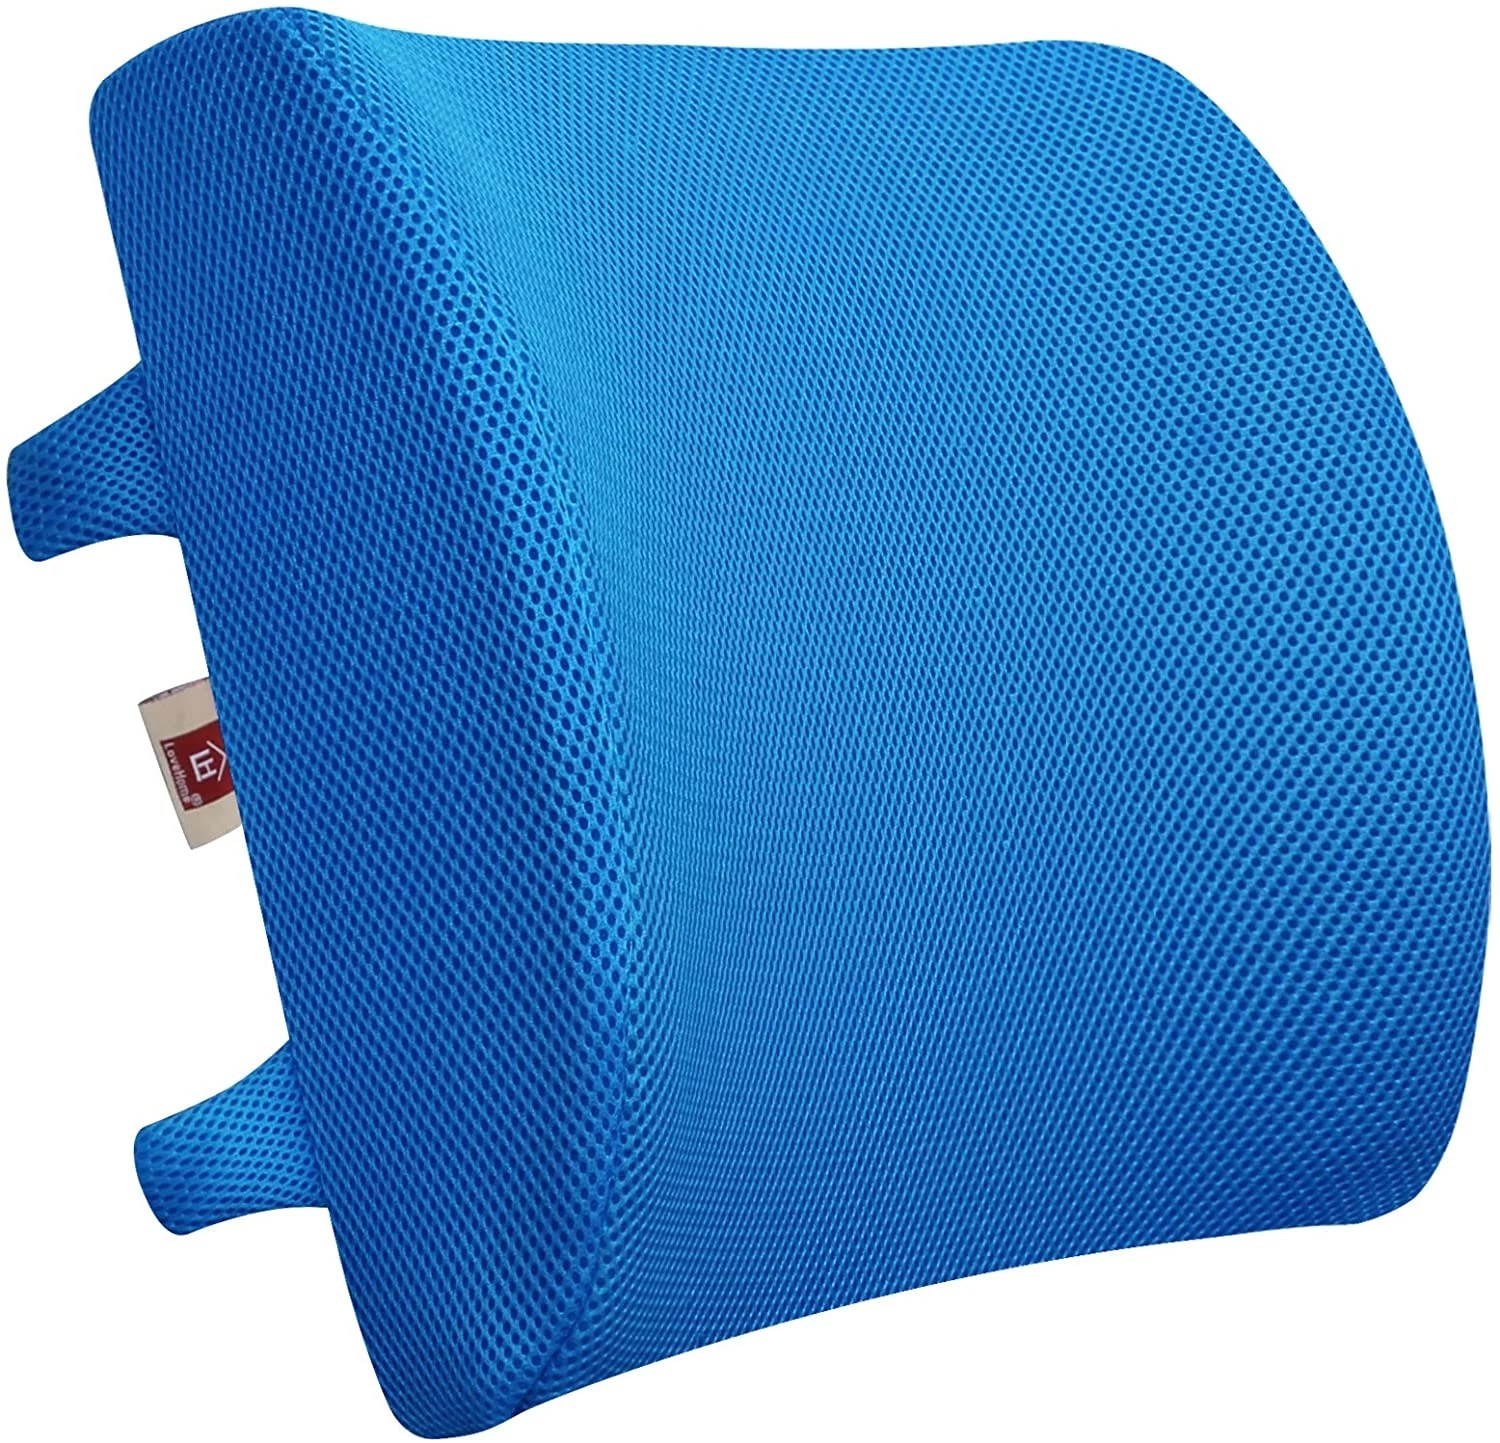 Original NeoCushion™ Orthopedic Seat Pillow